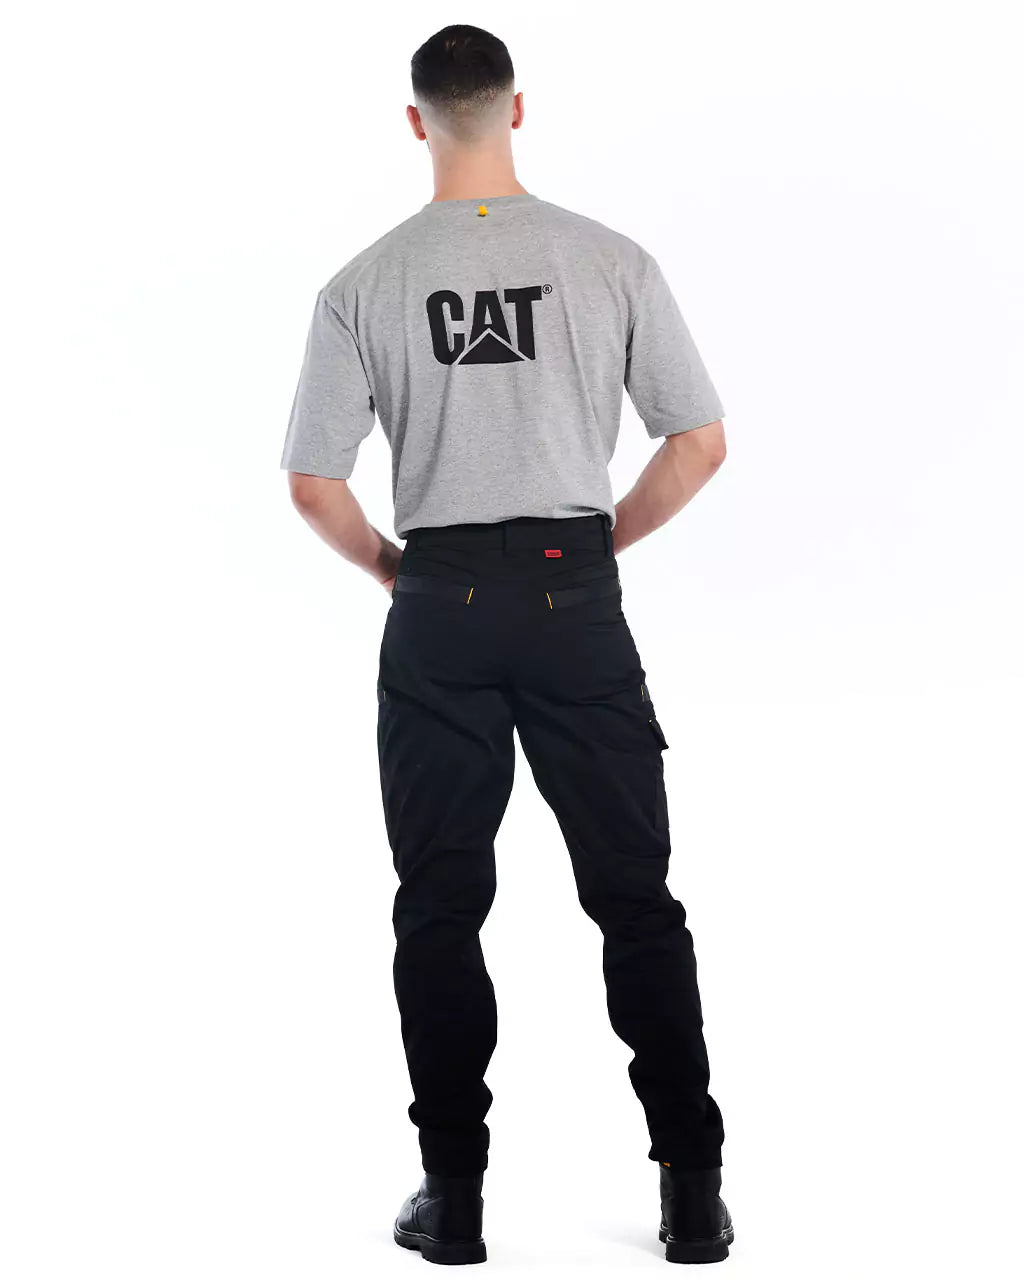 CAT Elite Operator Pant